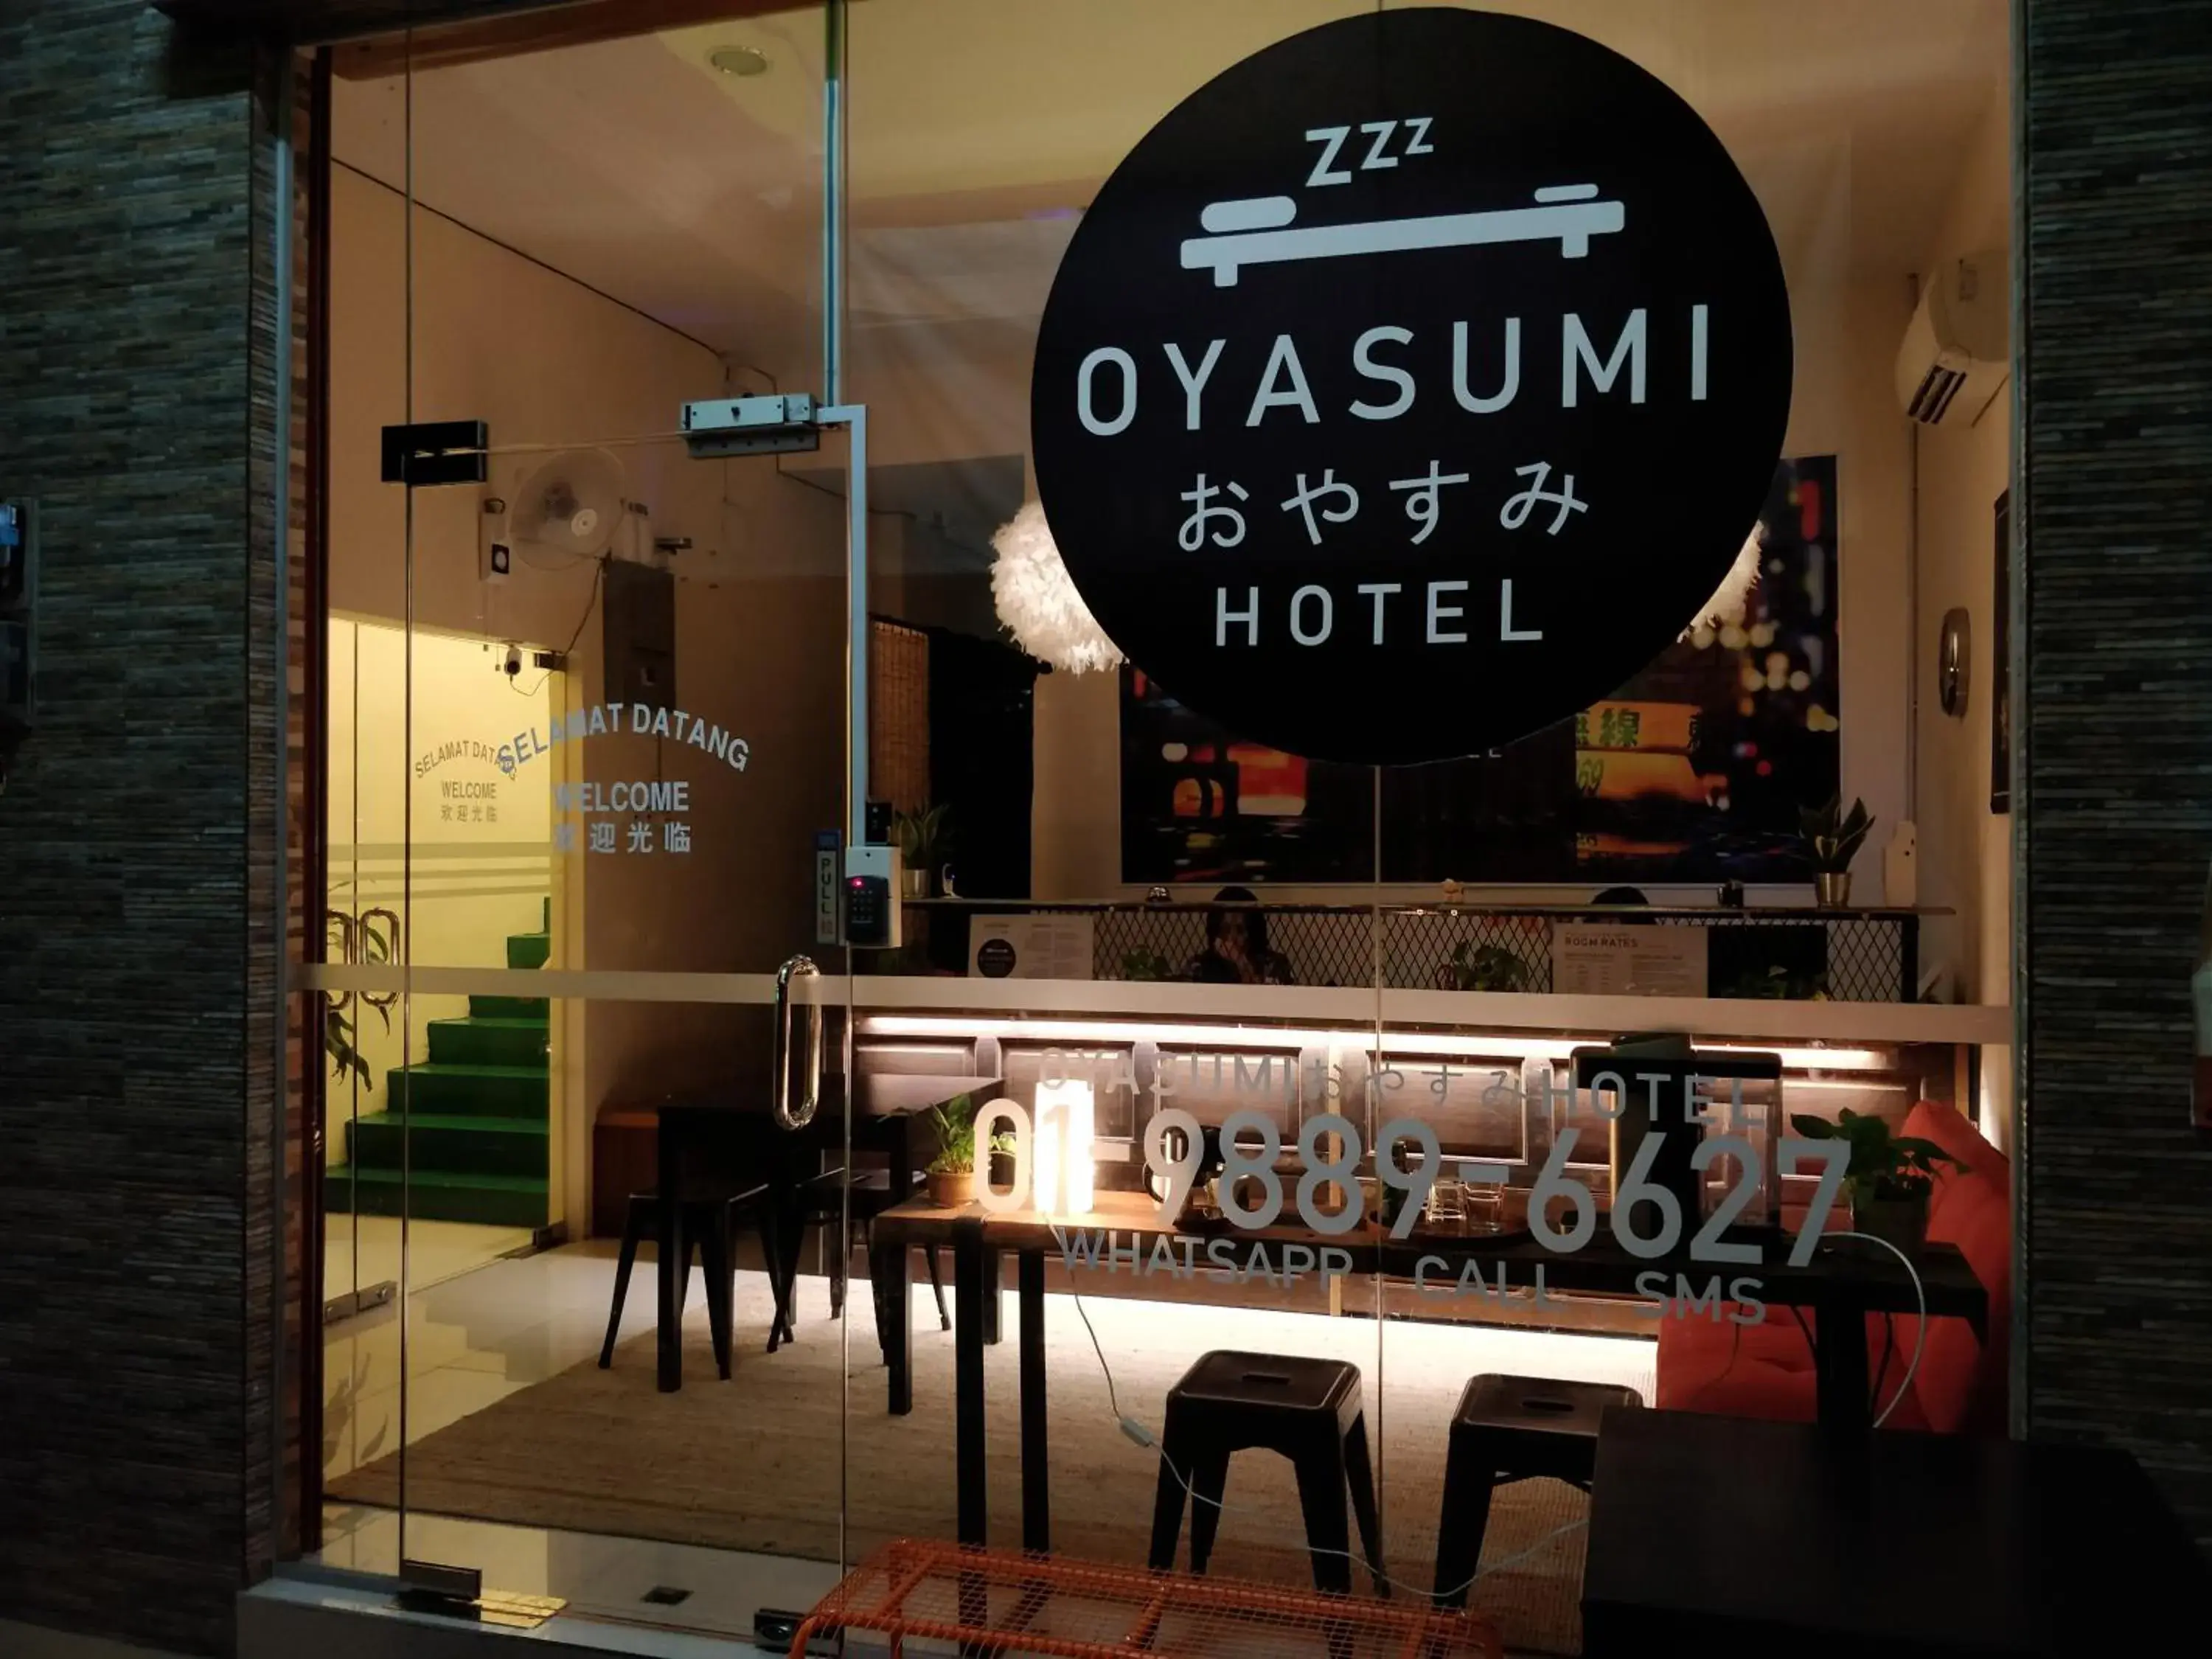 Night in Oyasumi Hotel